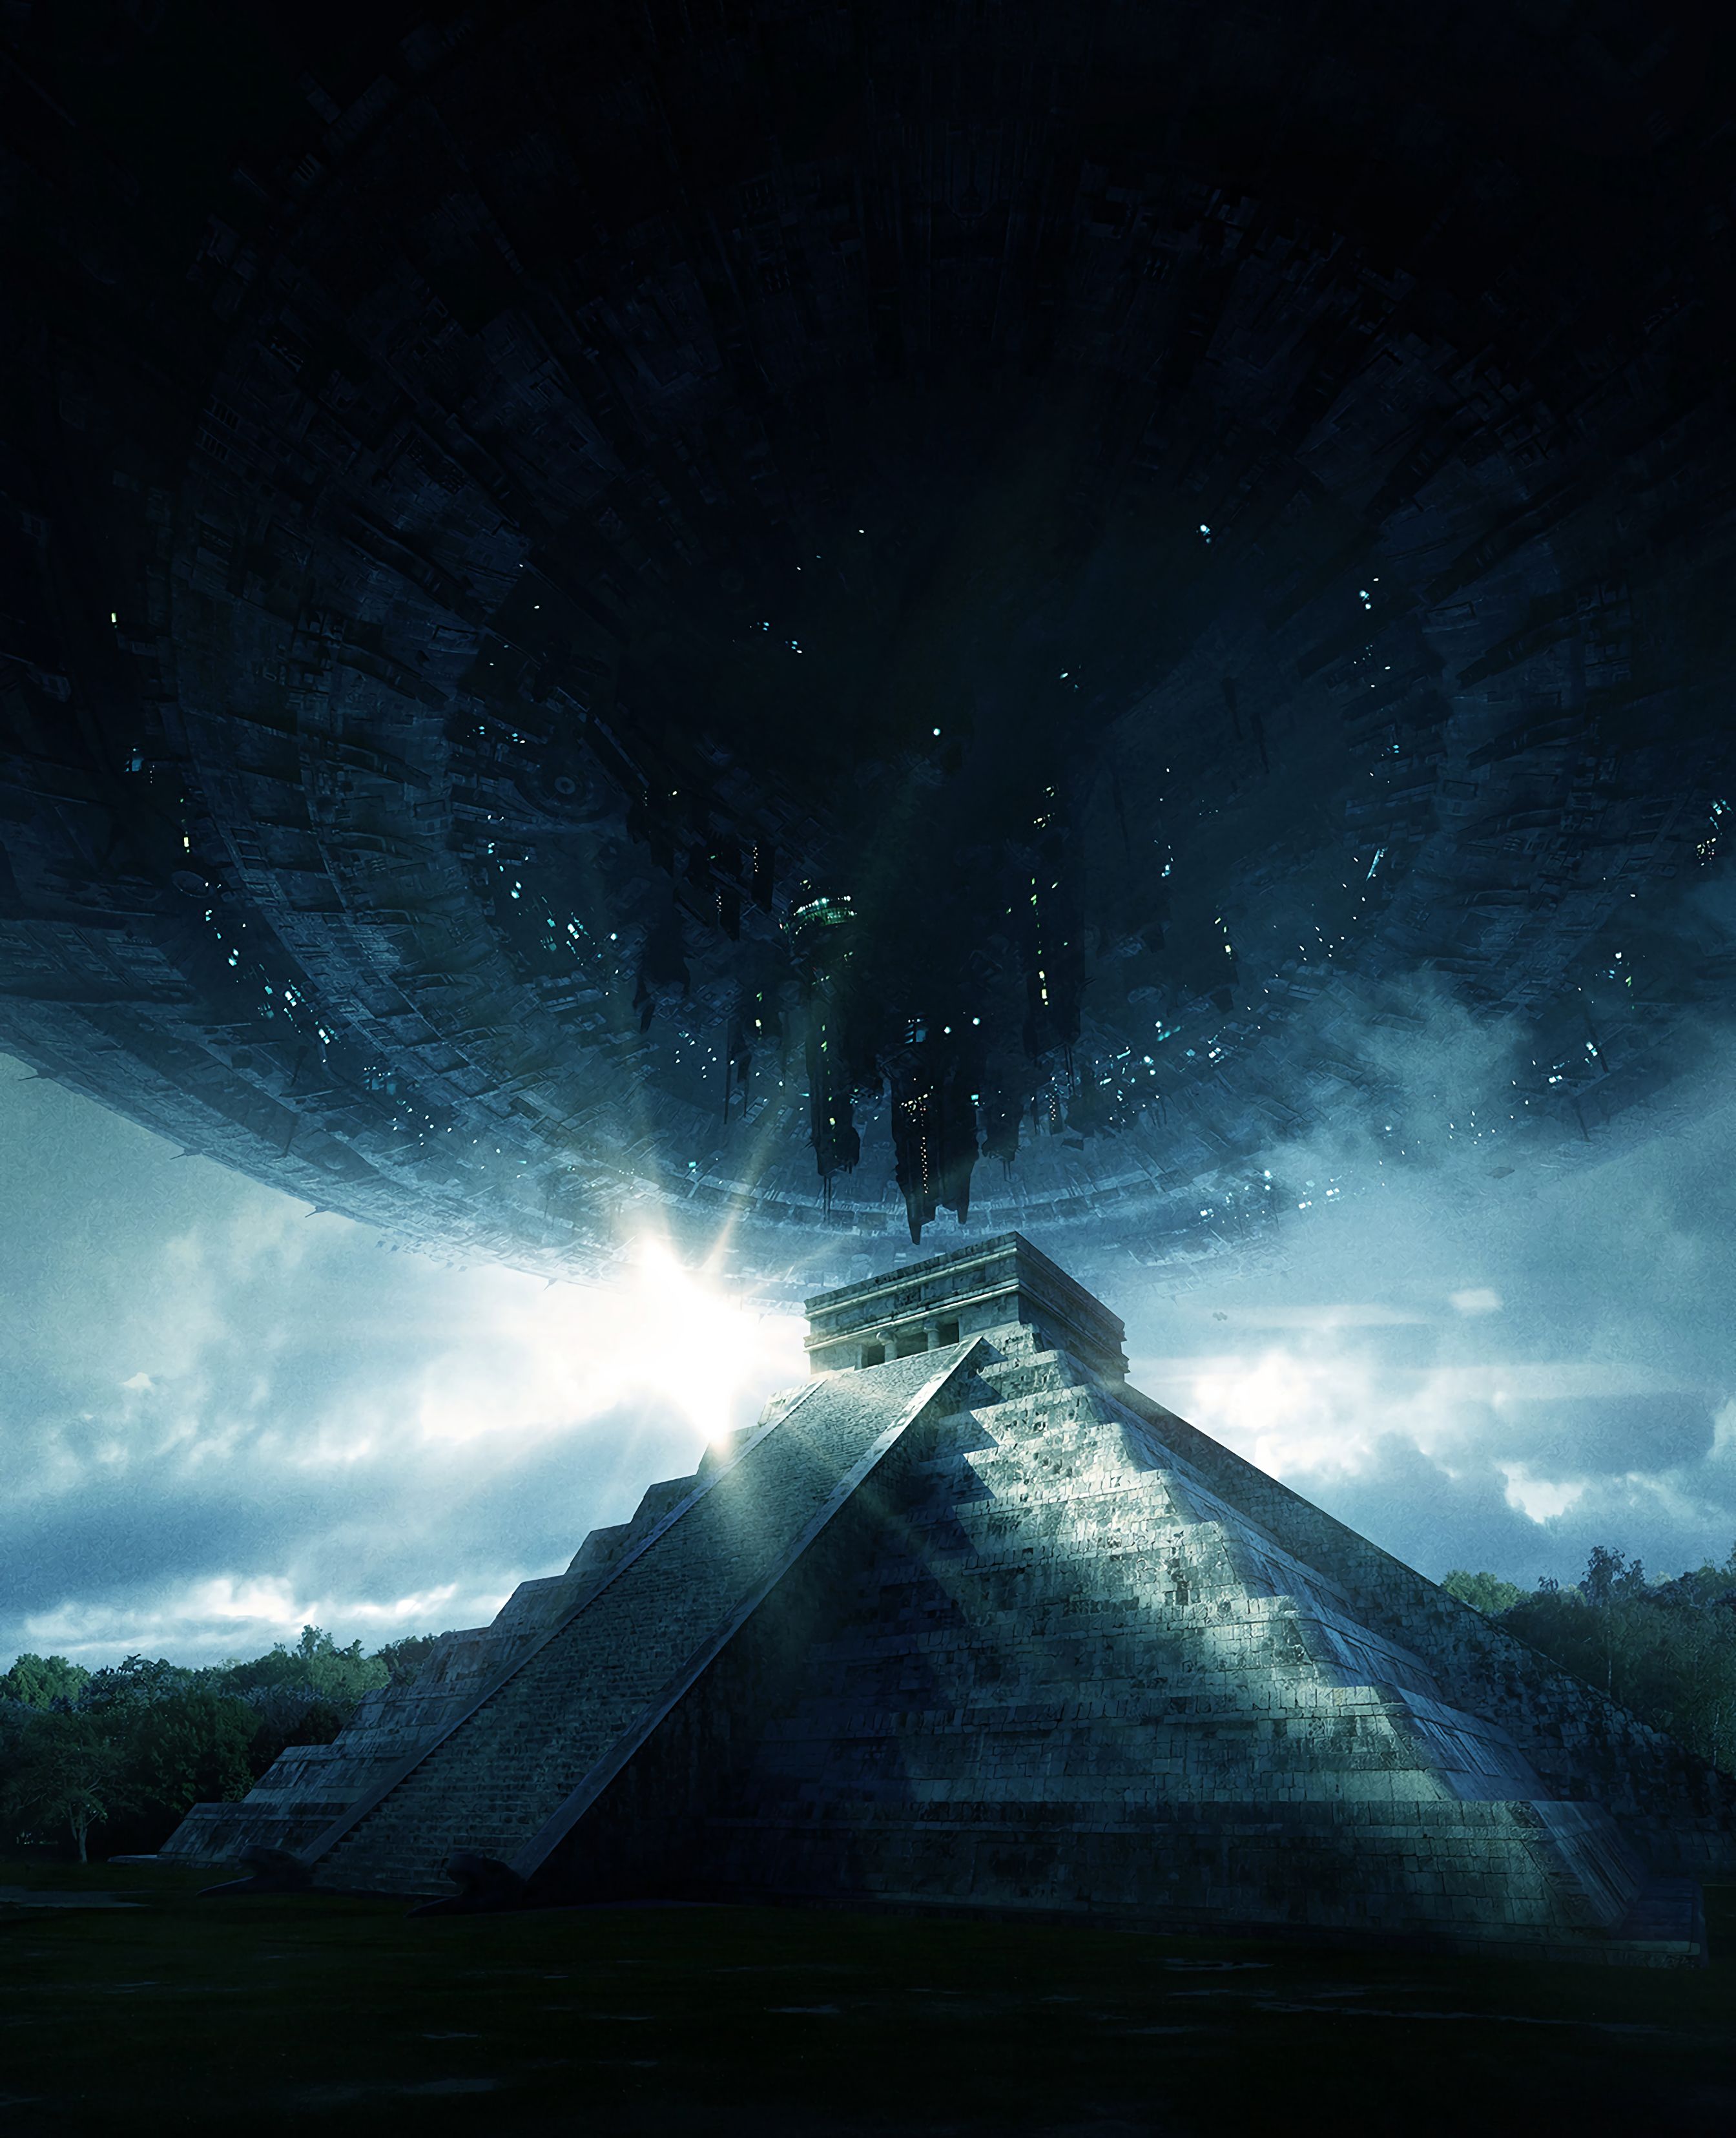 android ufo, aliens, extraterrestrial, fantasy, pyramid, civilization, contact, visit